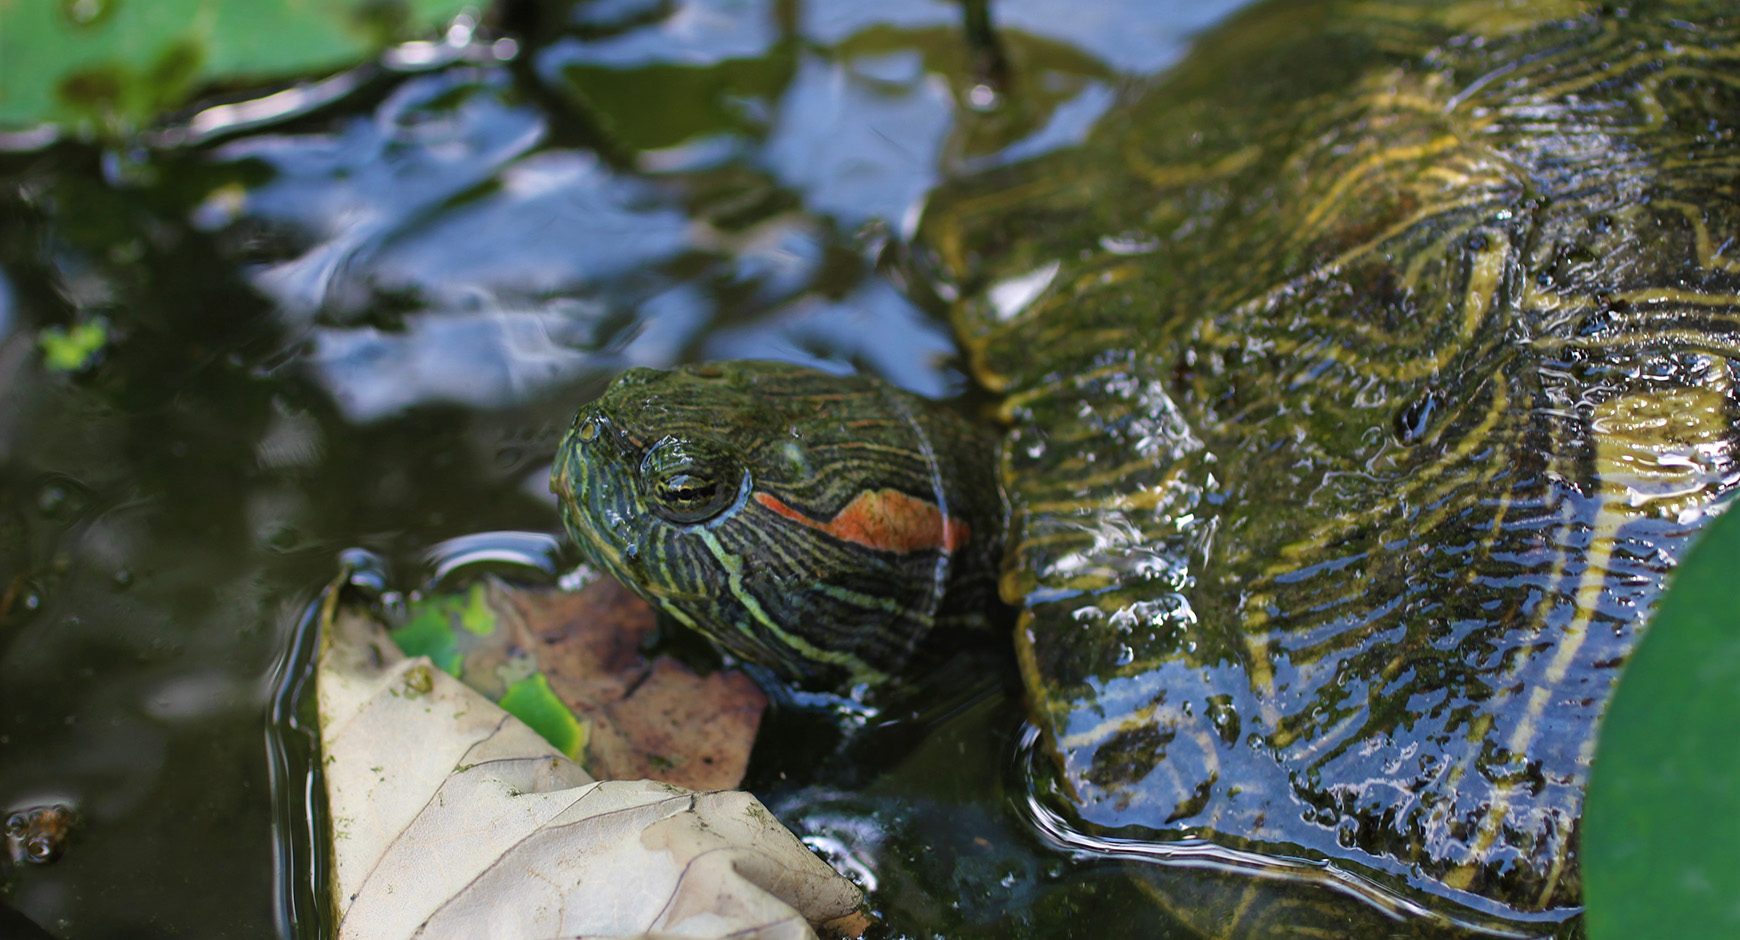 Turtle in Waller Creek